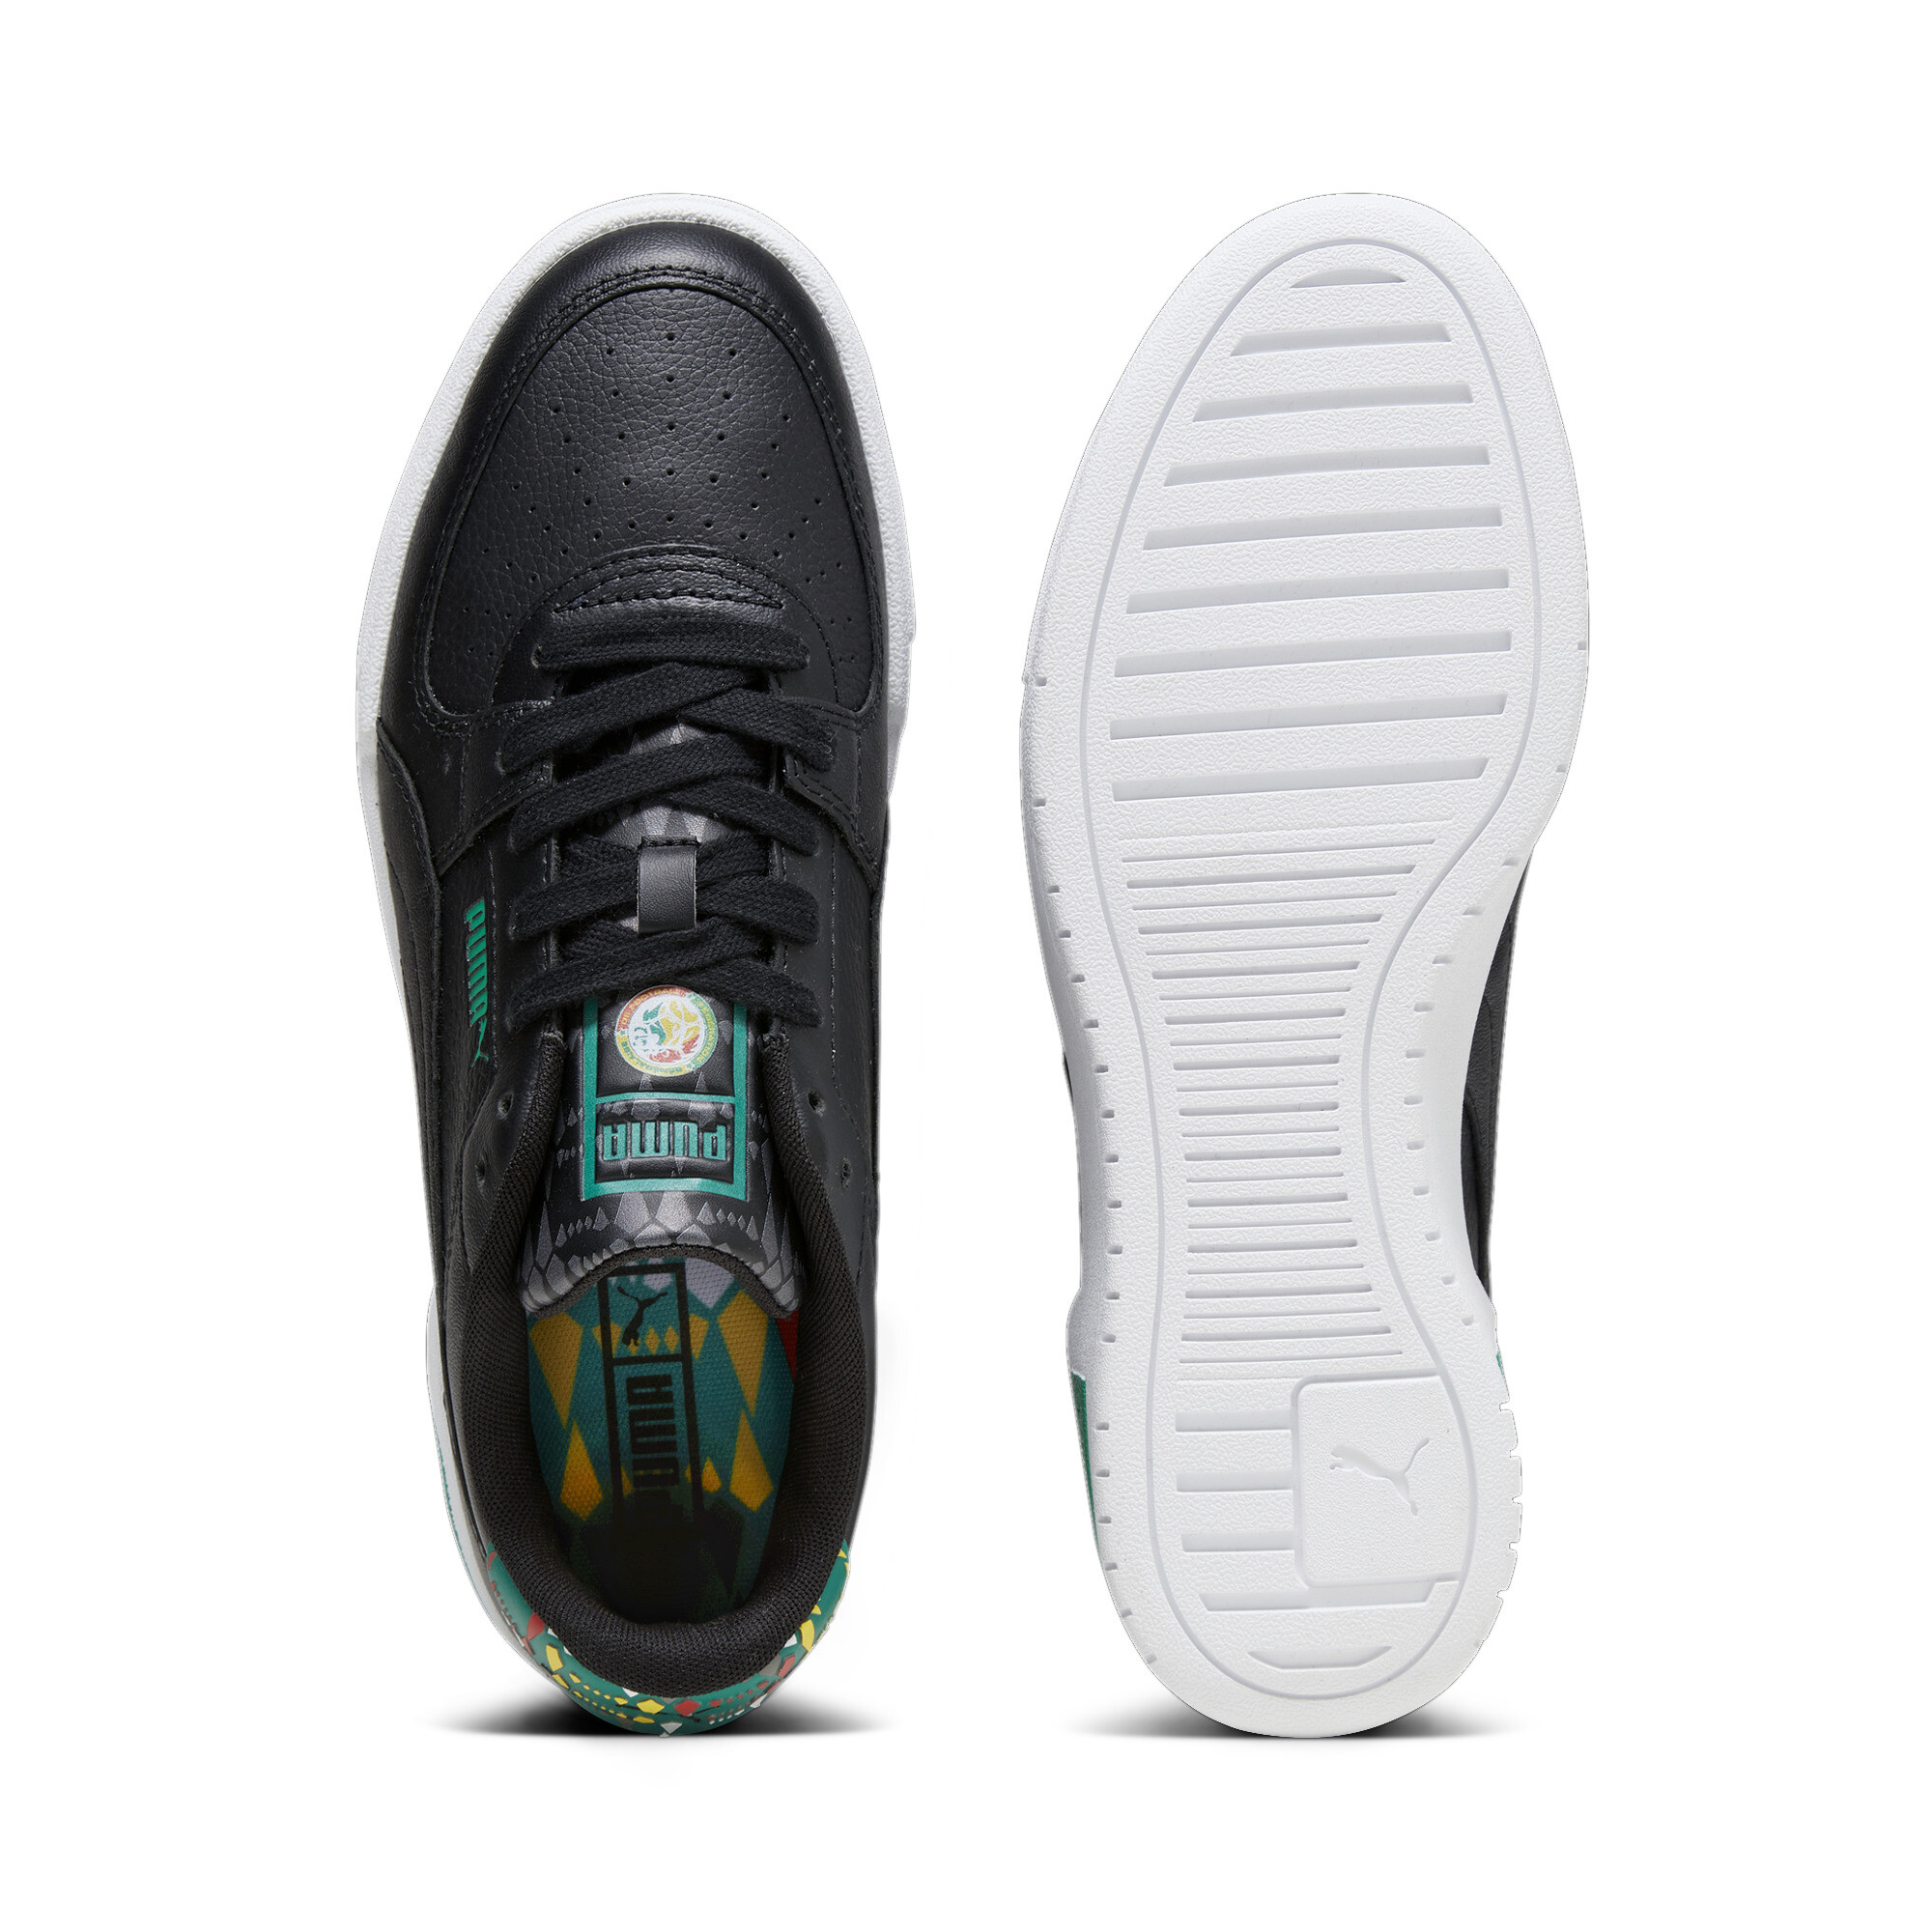 Men's PUMA CA Pro Senegal Football Sneakers In Black, Size EU 38.5